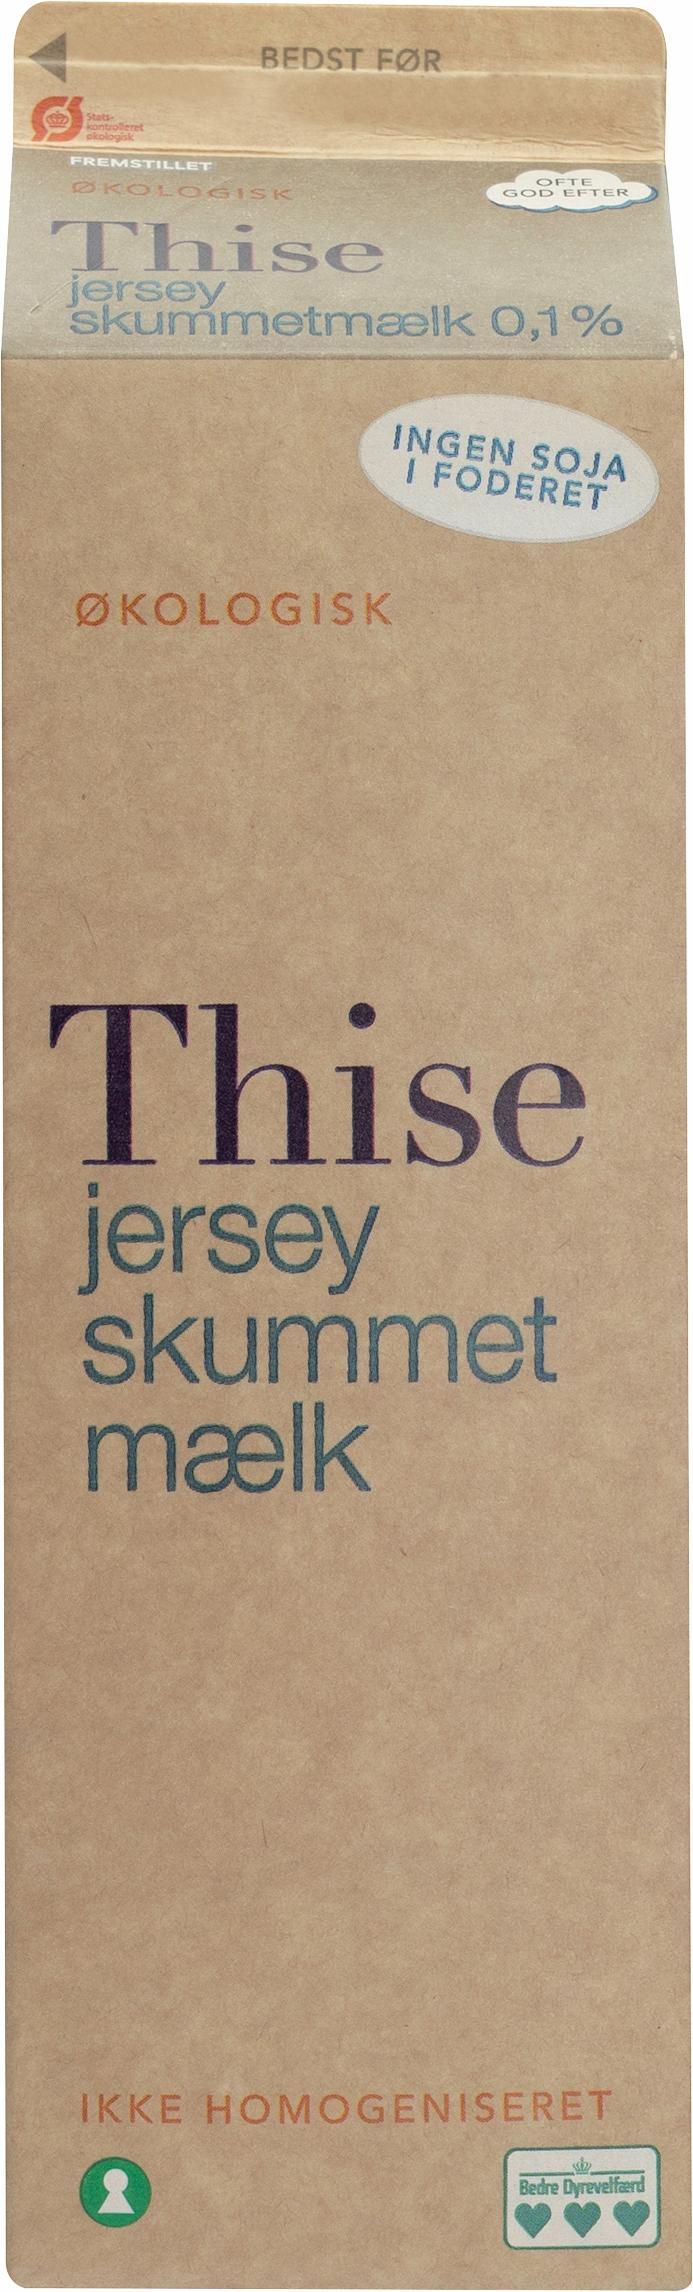 Thise Skummetmælk Jersey 0,1% 1L